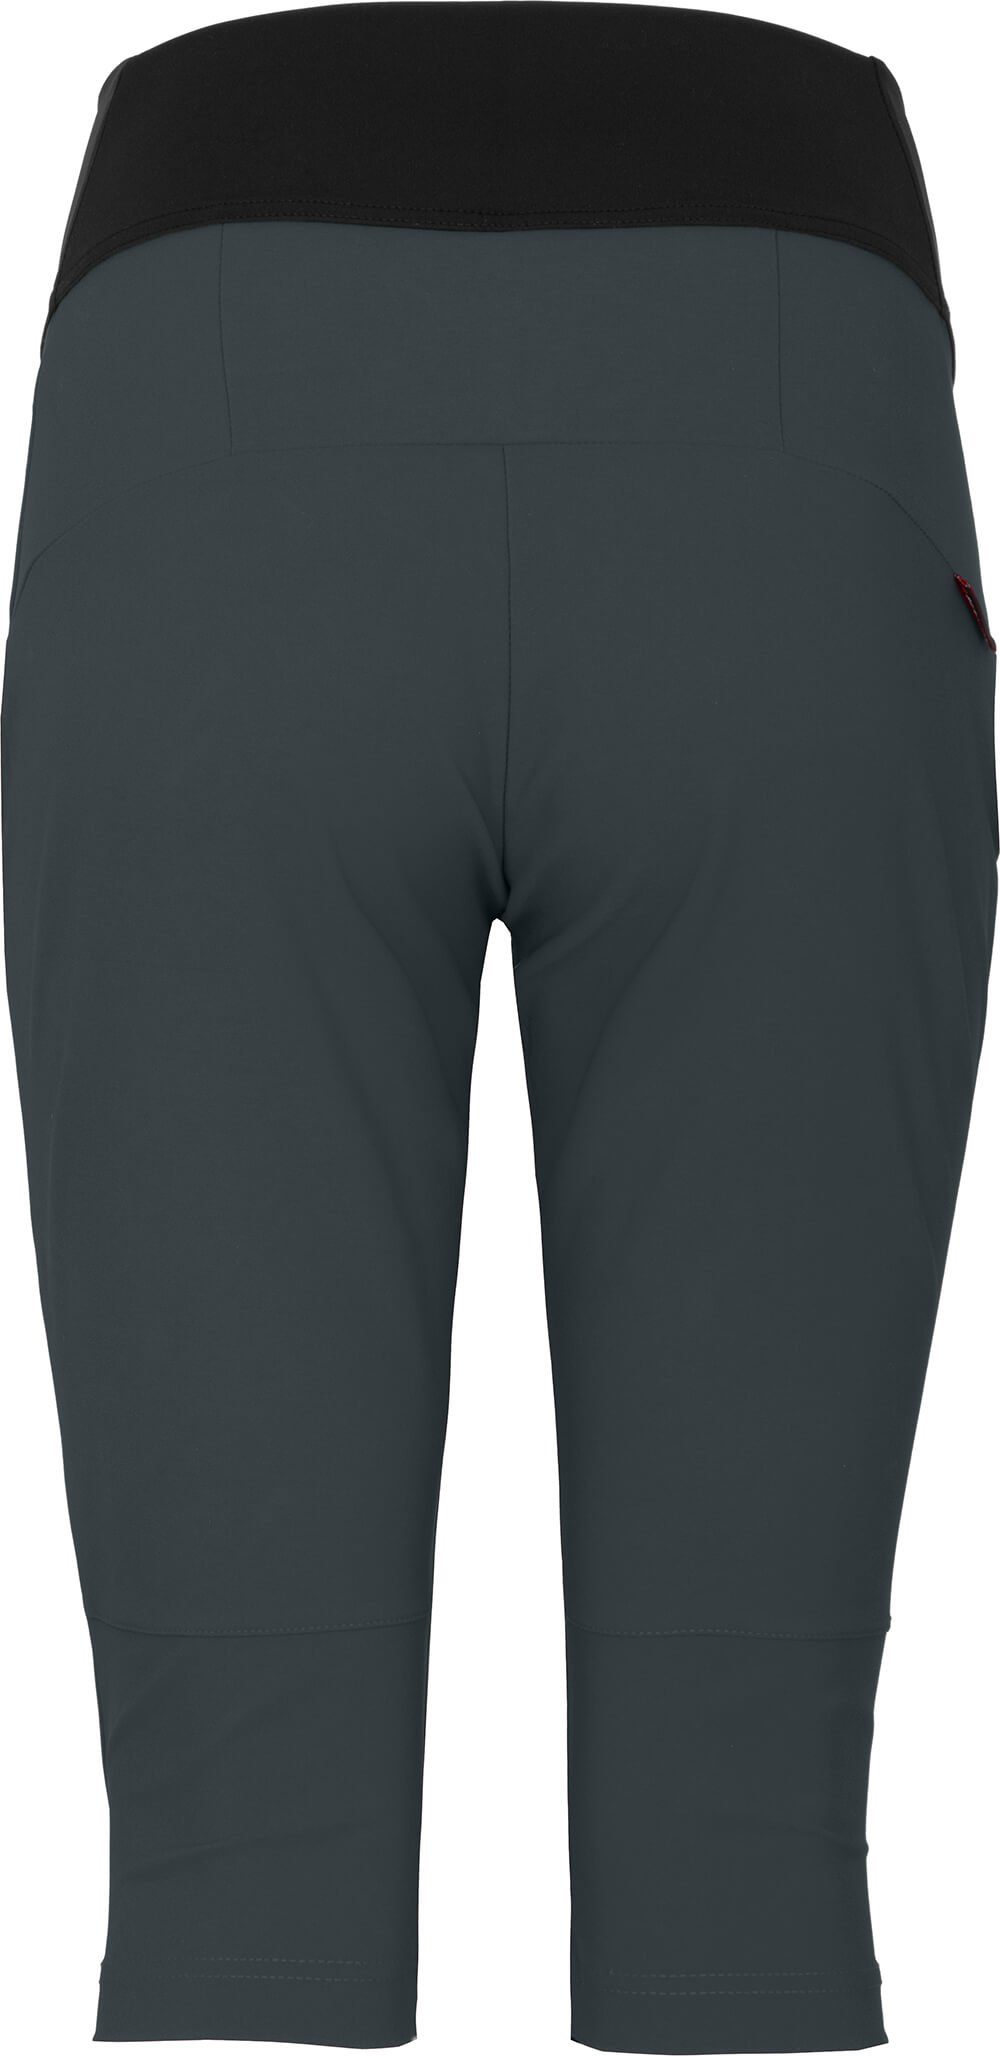 Leggings, Capri schnelltrocknend, elastisch, TIKEN grau Normalgrößen, Bergson 3/4 dunkel Outdoor Damen (tight) Outdoorhose